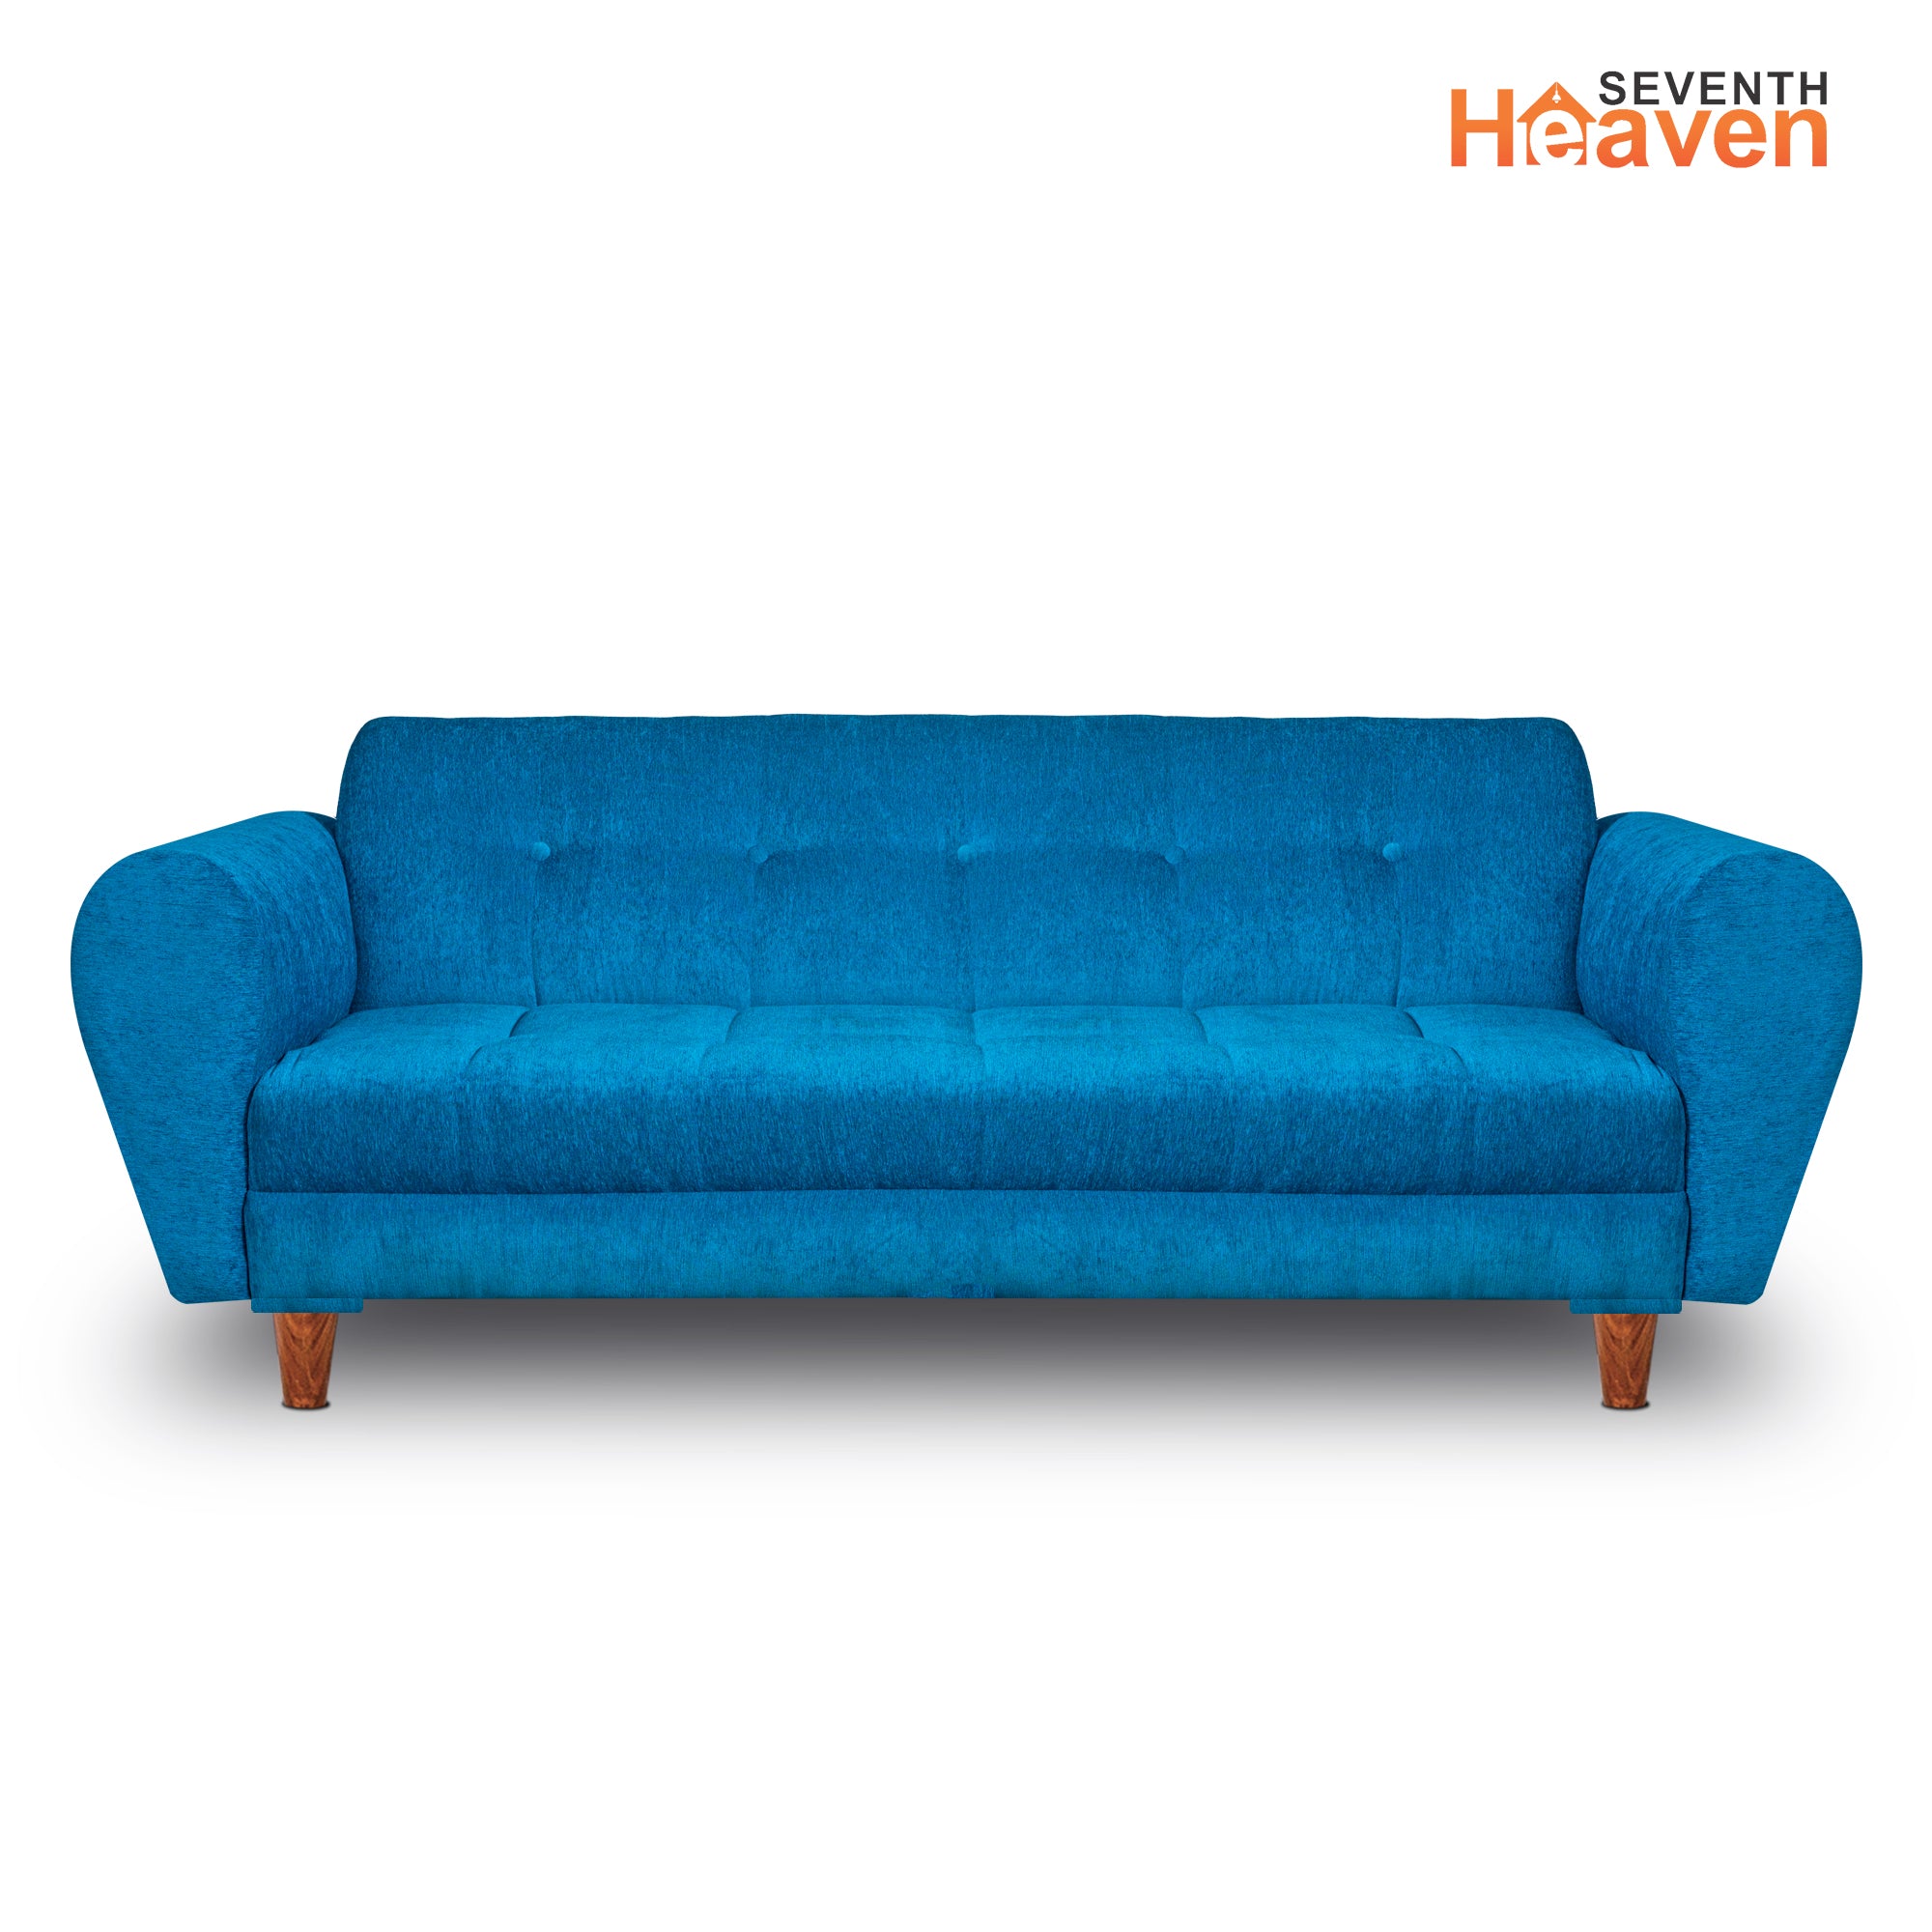 Seventh Heaven Milan 4 Seater Sofa with Ottoman, Chenille Molfino Fabric: 3 Year Warranty Fabric 4 Seater Sofa  (Finish Color - Sky Blue, DIY(Do-It-Yourself))